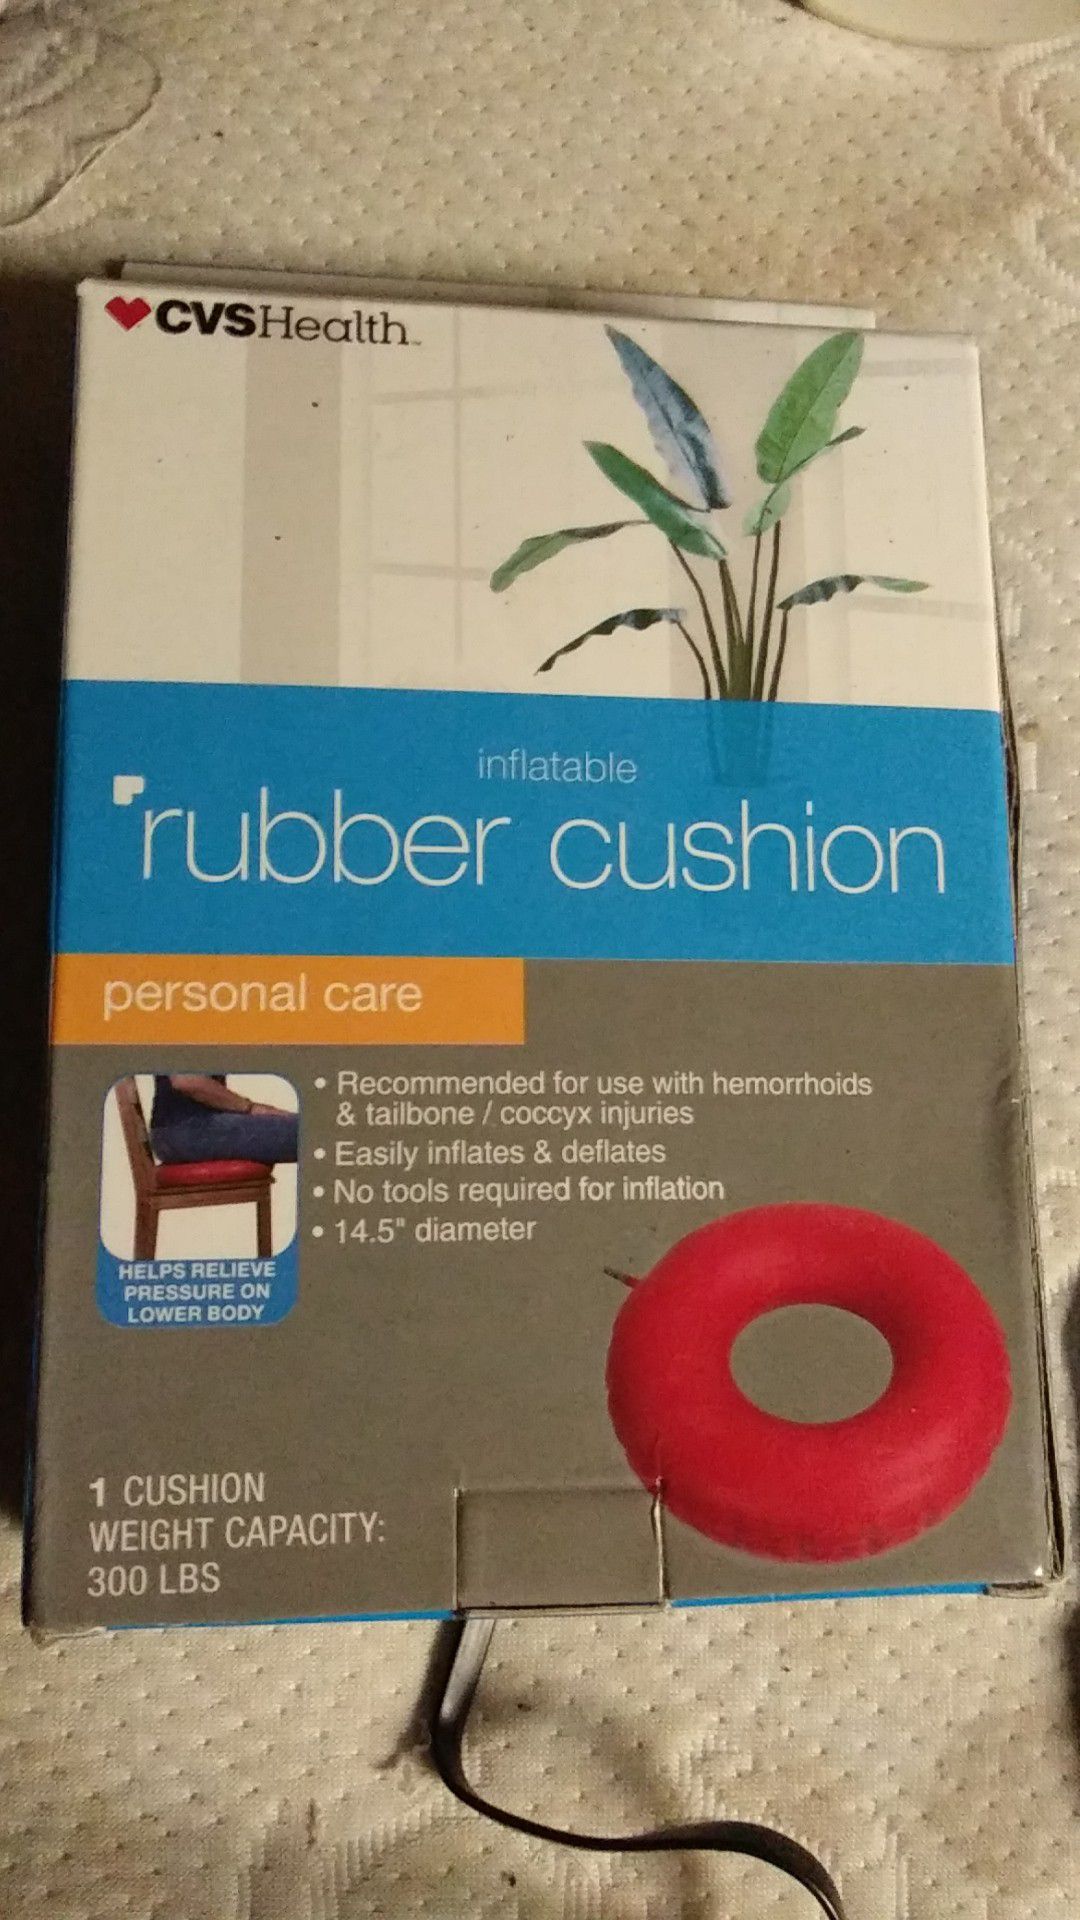 CVS inflatable rubber cushion